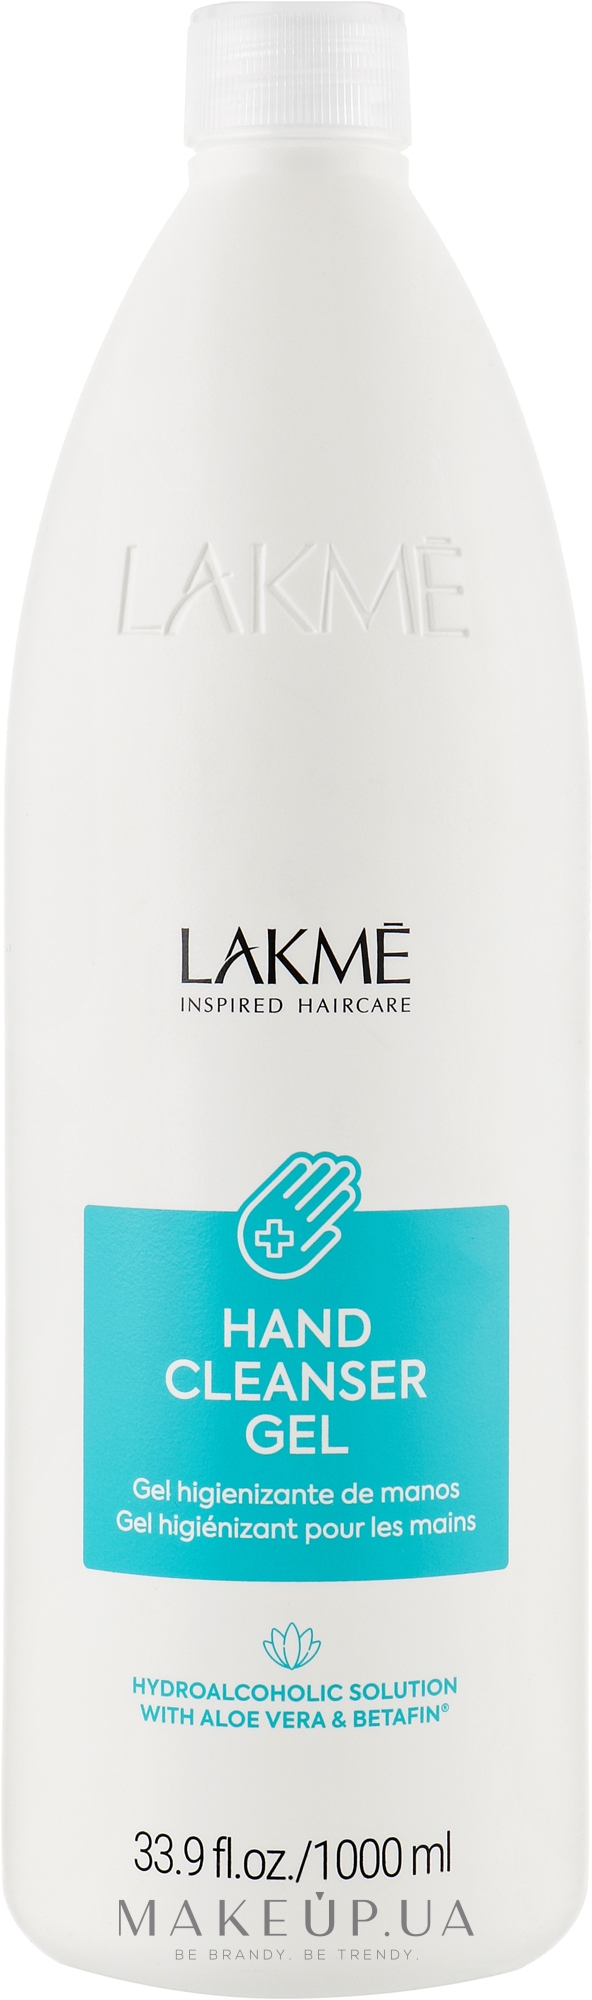 Дезинфицирующий гель для рук - Lakme Hand Sanitizer — фото 1000ml